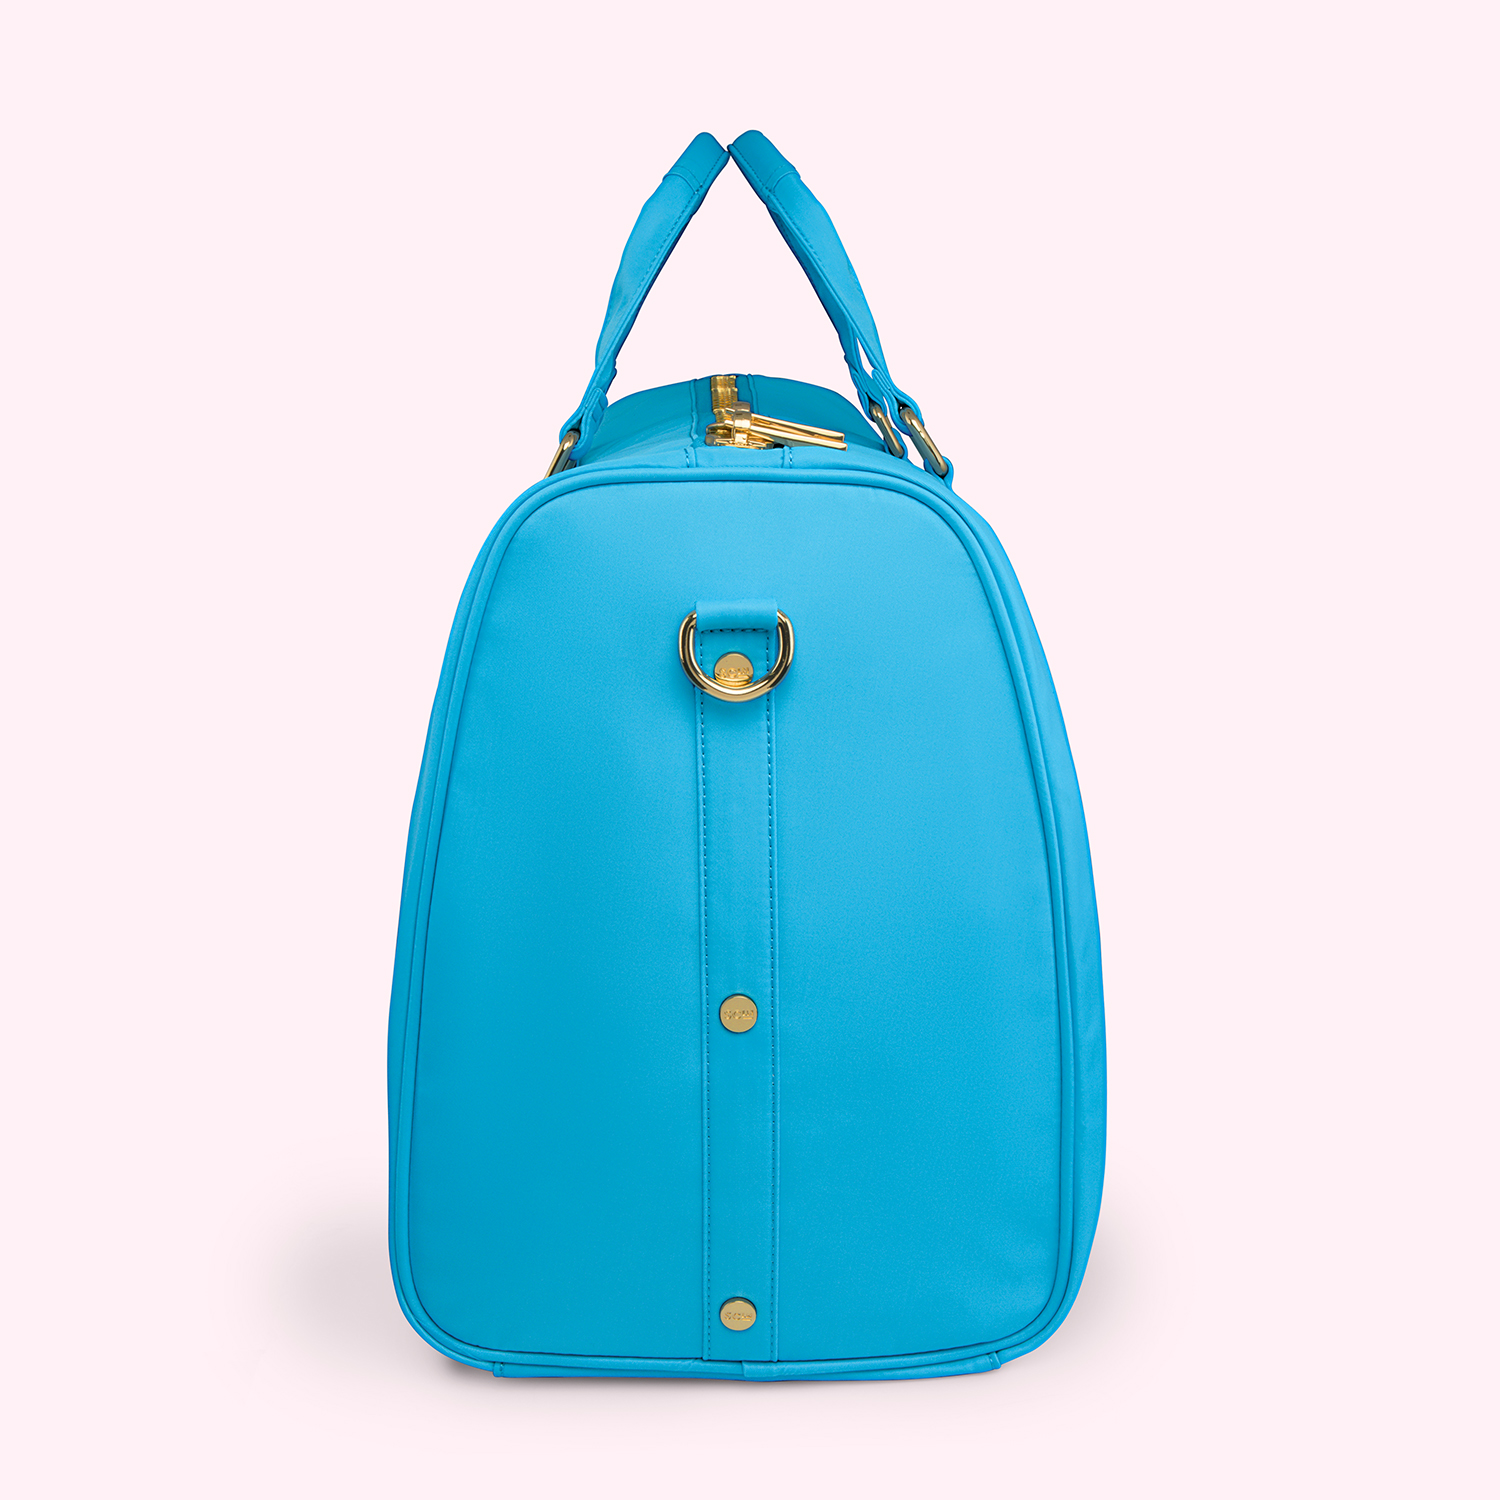 Blue Duffle Bag & Weekender Bag | Stoney Clover Lane